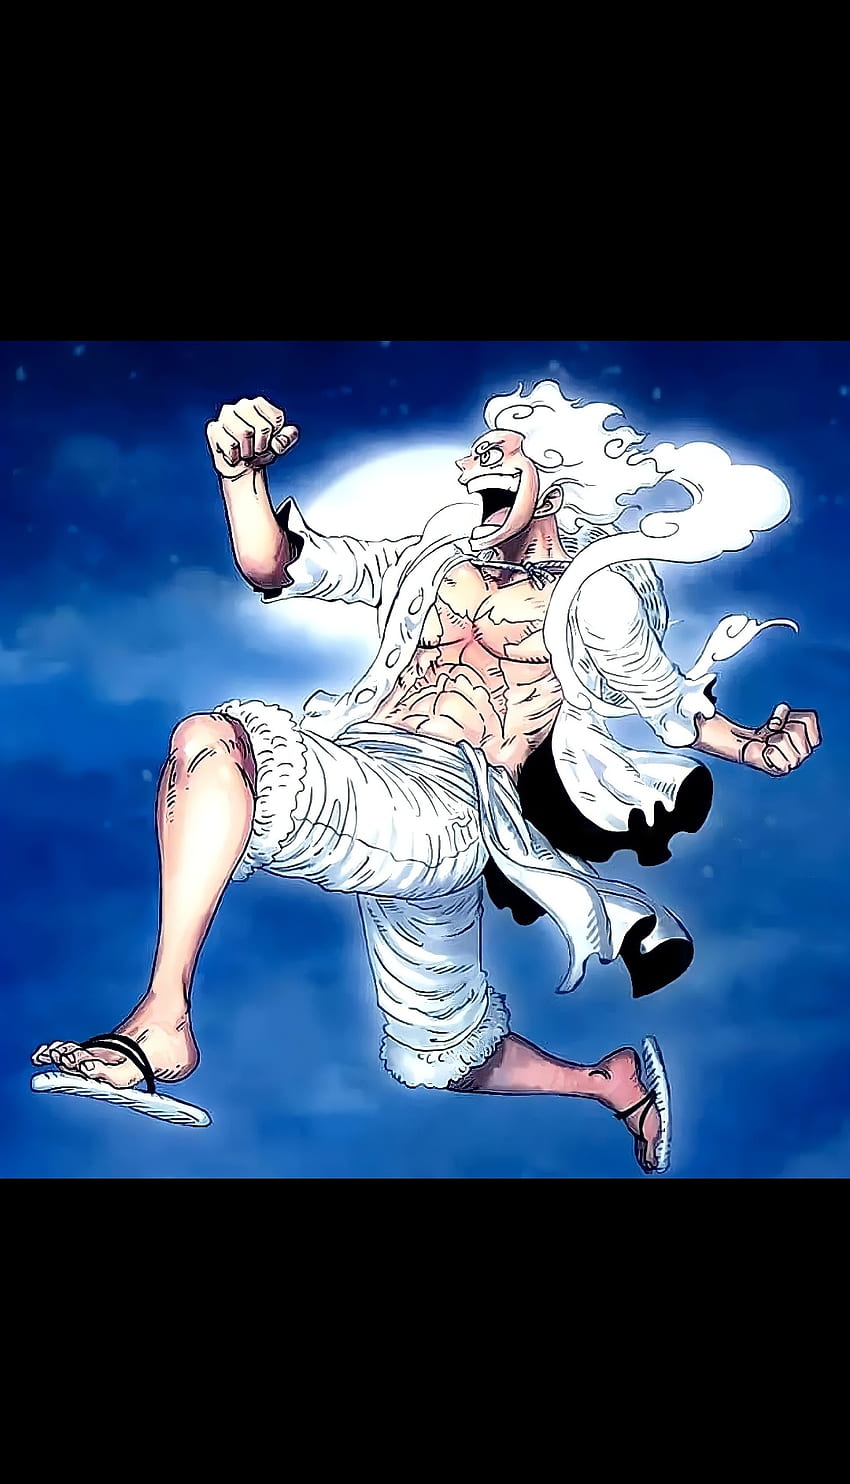 Video fan art de One Piece da vida al despertar de Luffy